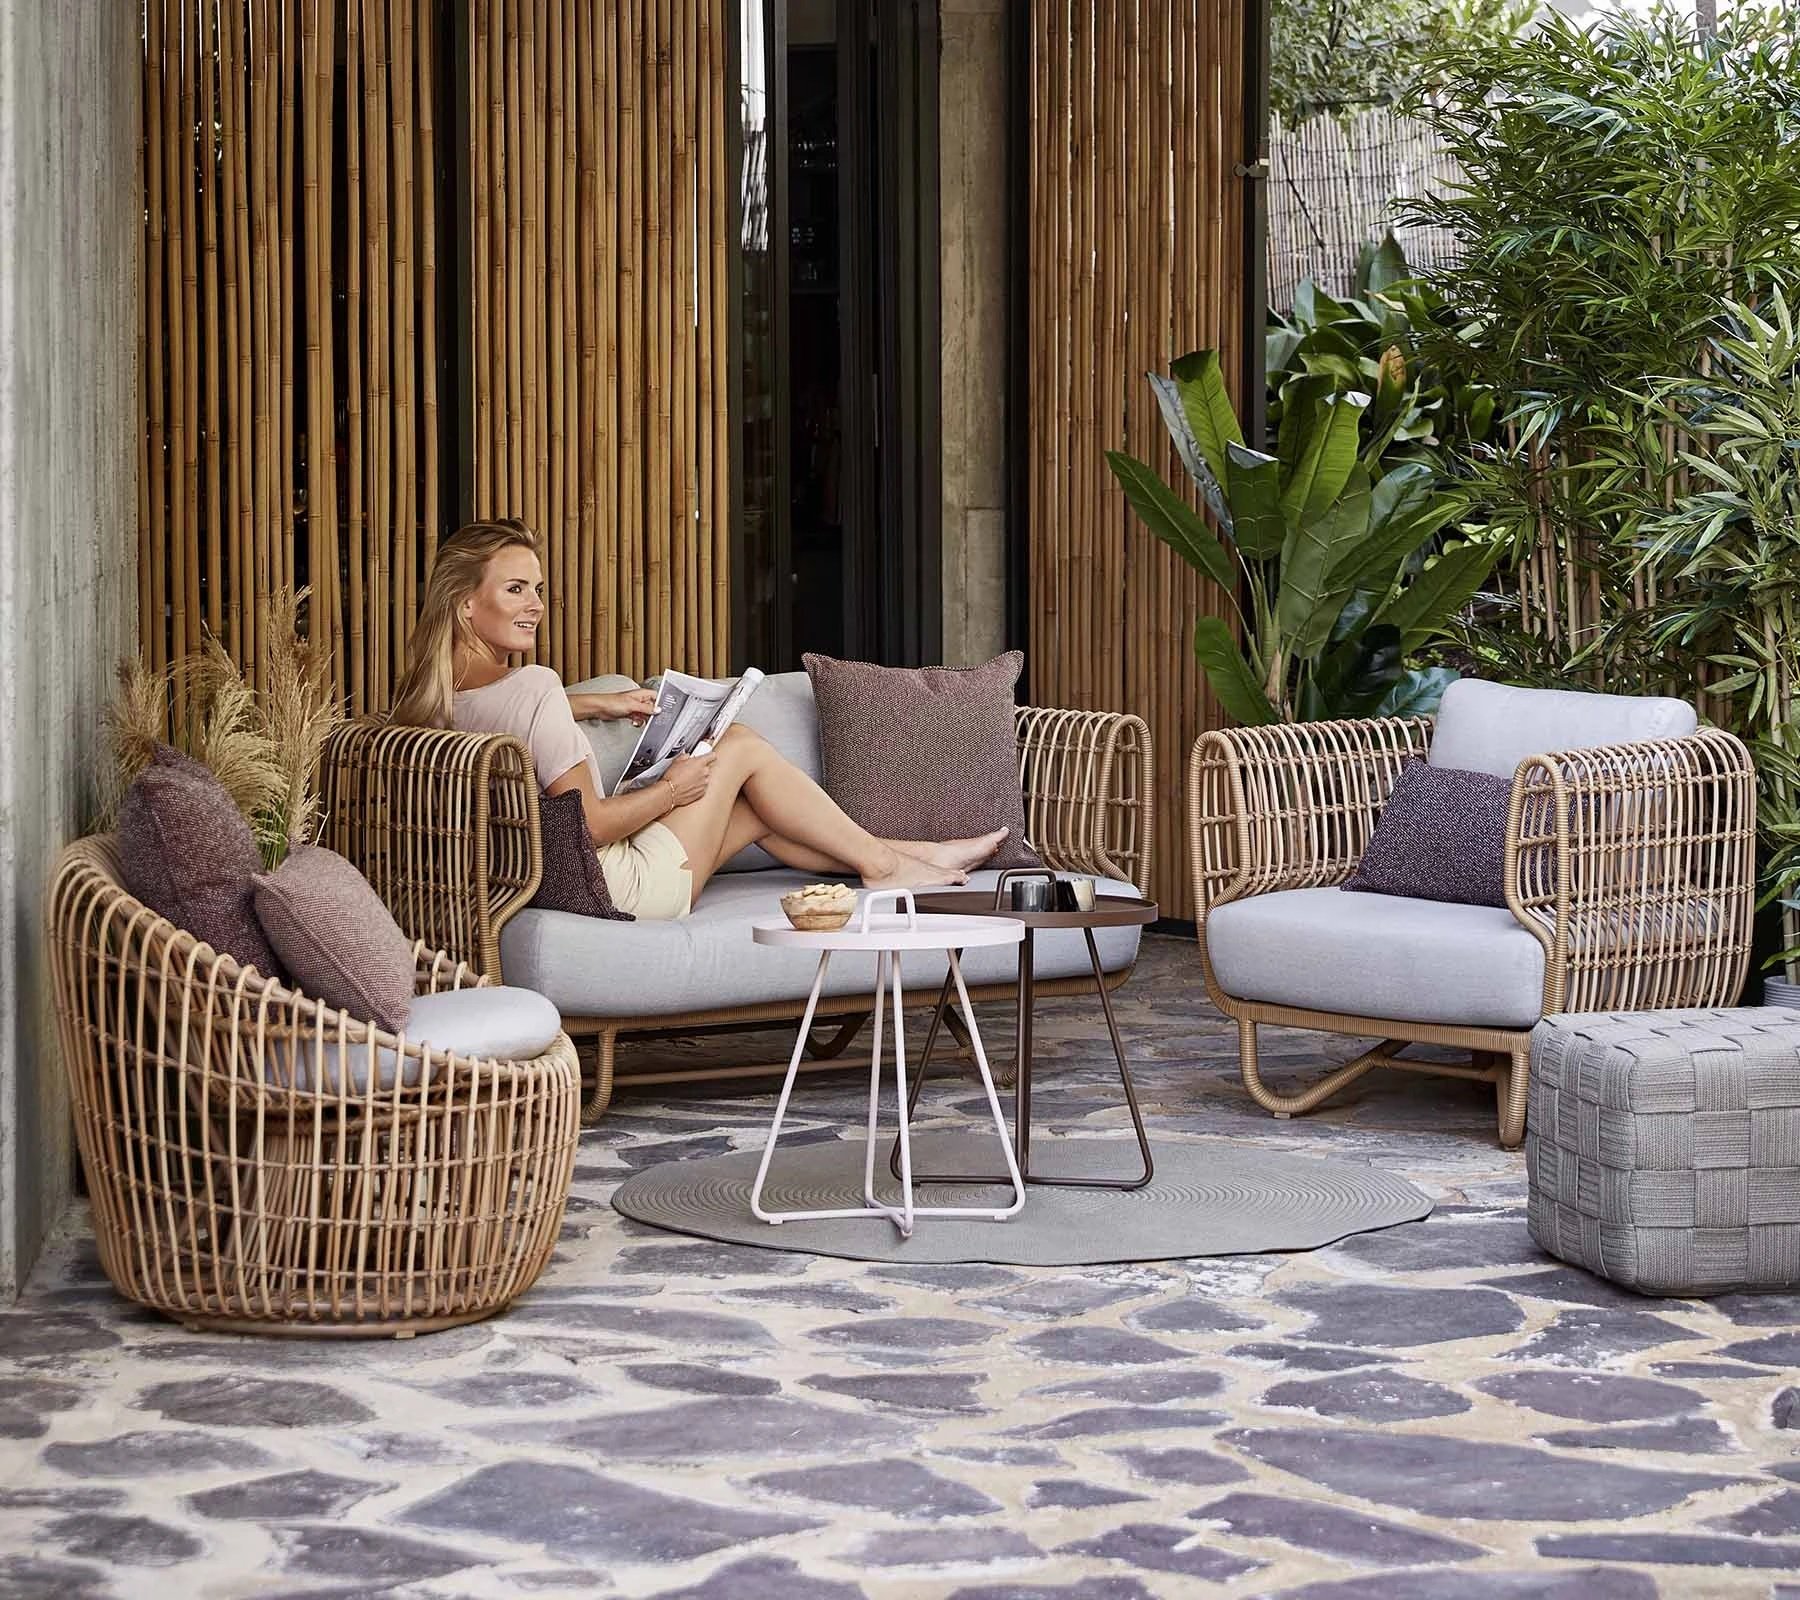 Nest Round Lounge Chair from Cane-line, designed by Foersom & Hiort-Lorenzen MDD